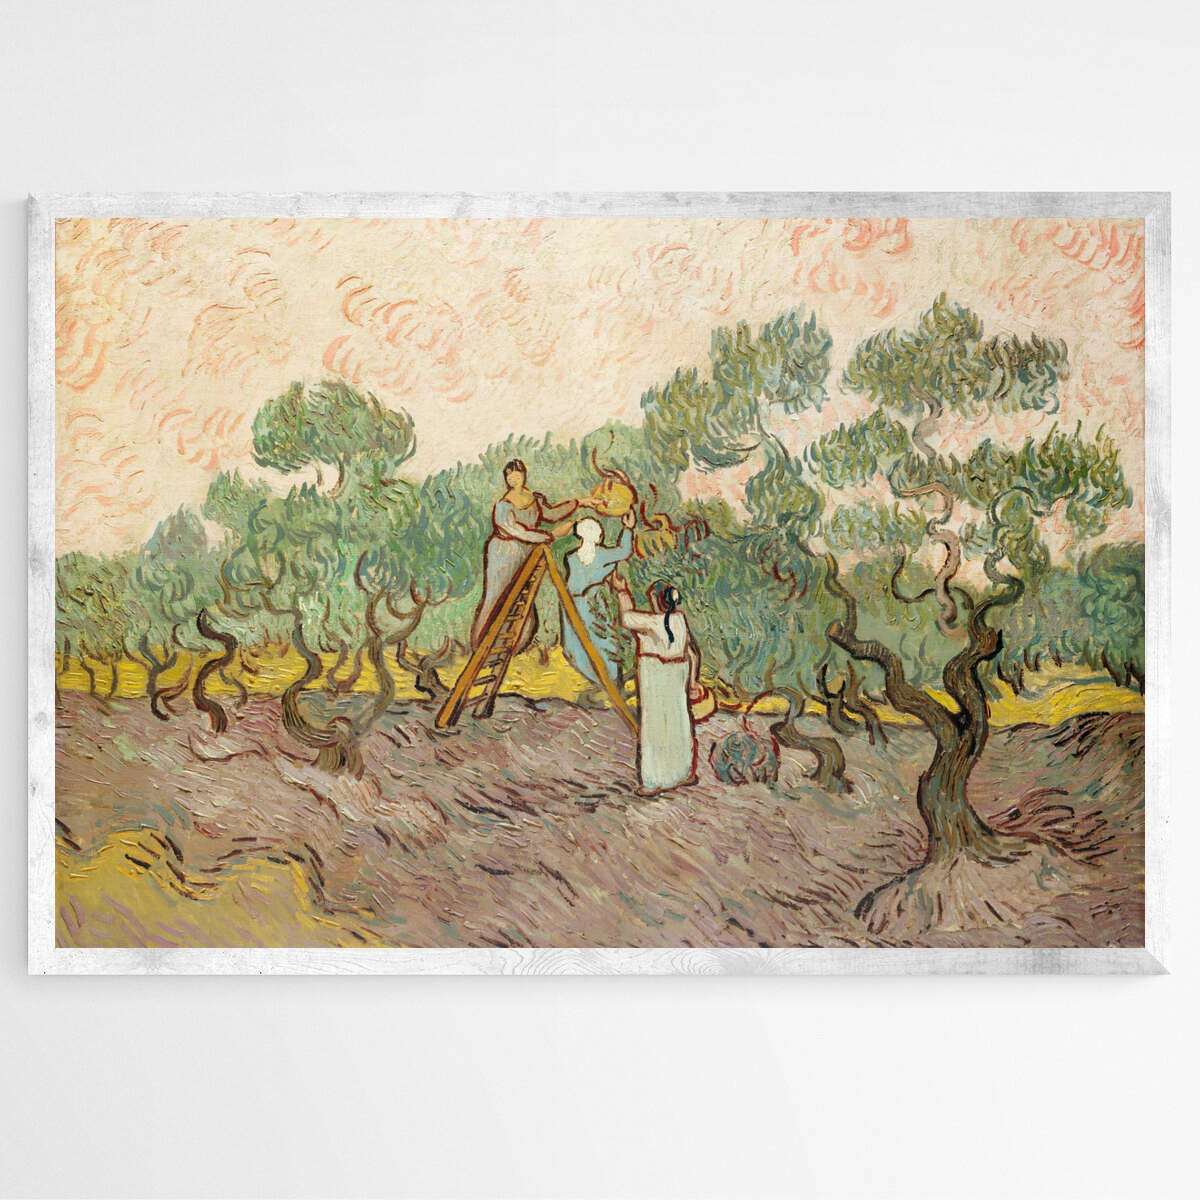 Women Picking Olives by Vincent Van Gogh | Vincent Van Gogh Wall Art Prints - The Canvas Hive